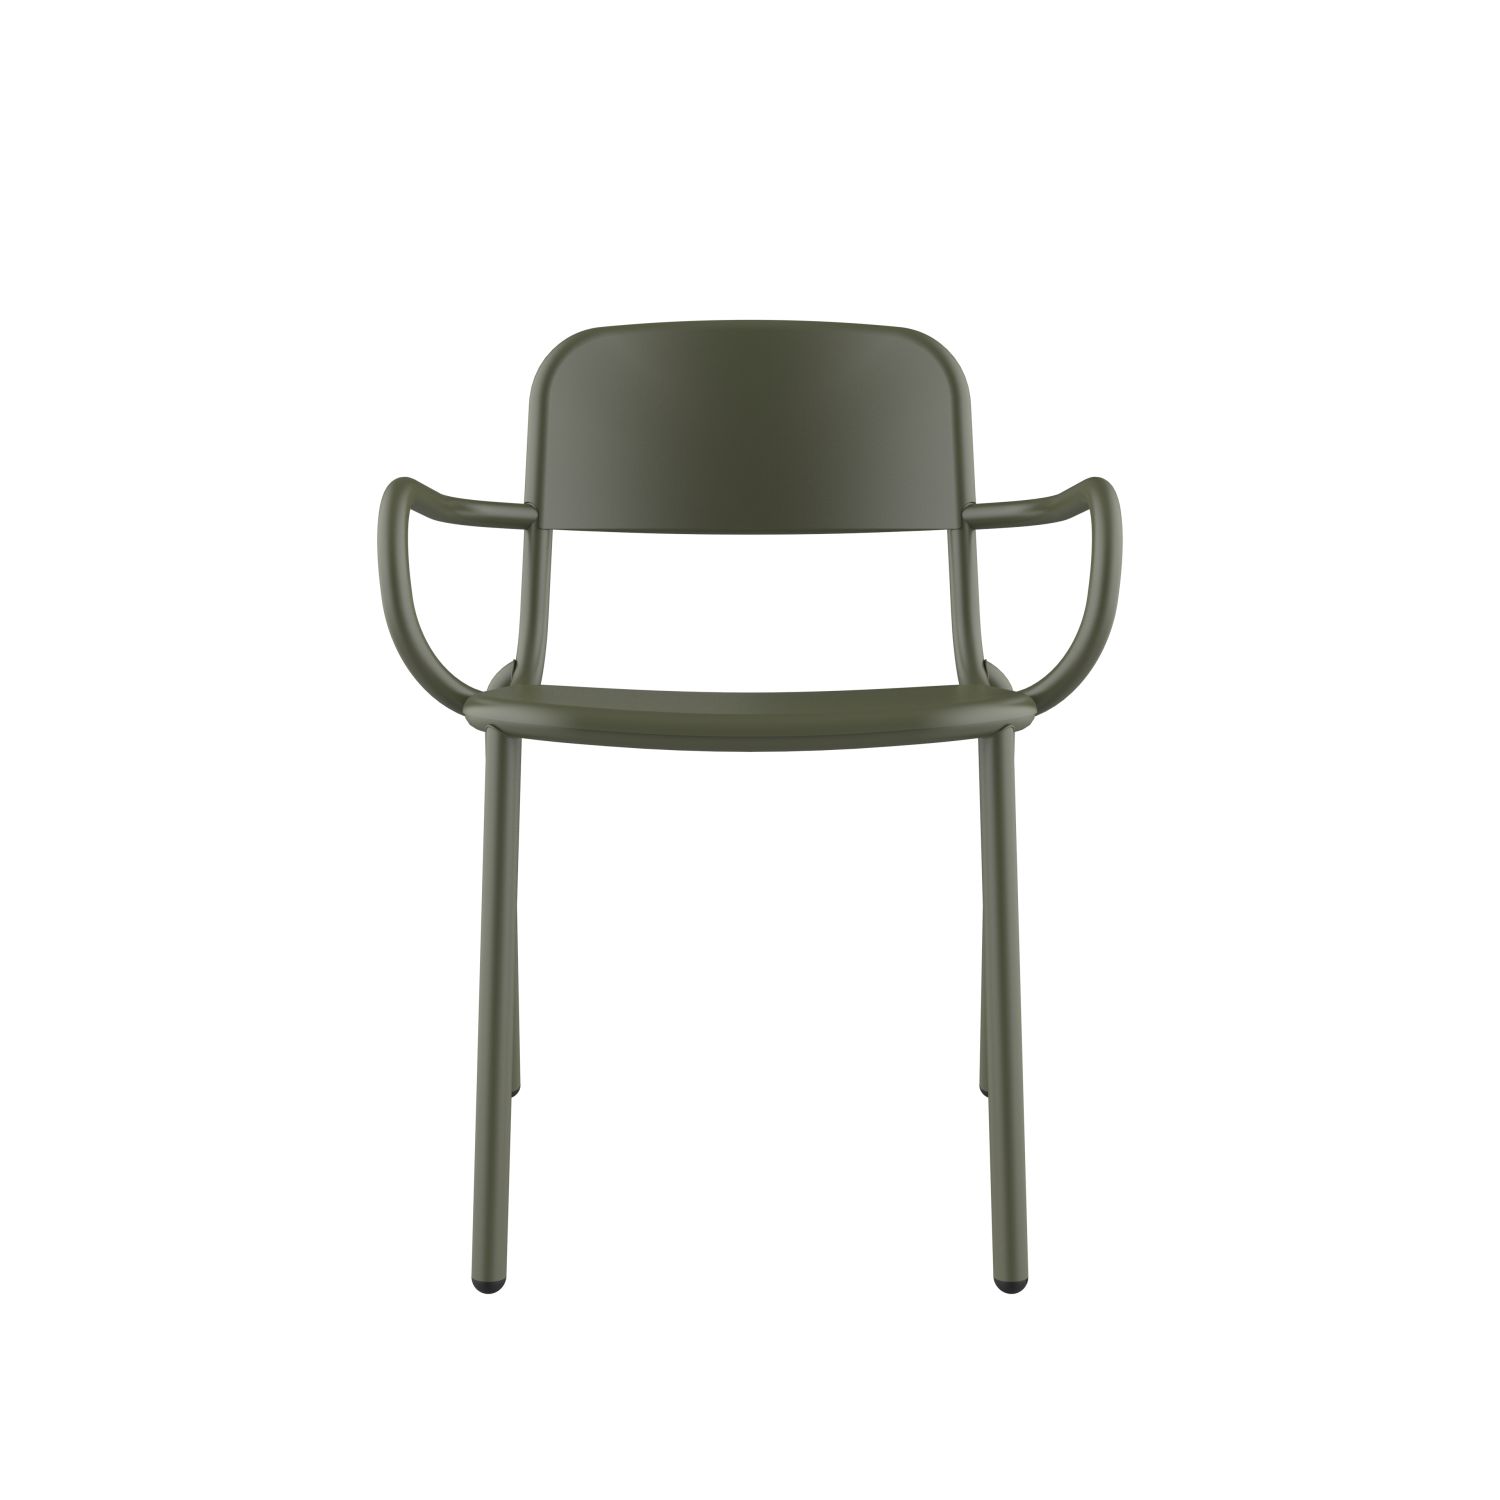 lensvelt studio stefan scholten loop chair stackable with armrests no perforation olive green ral6003